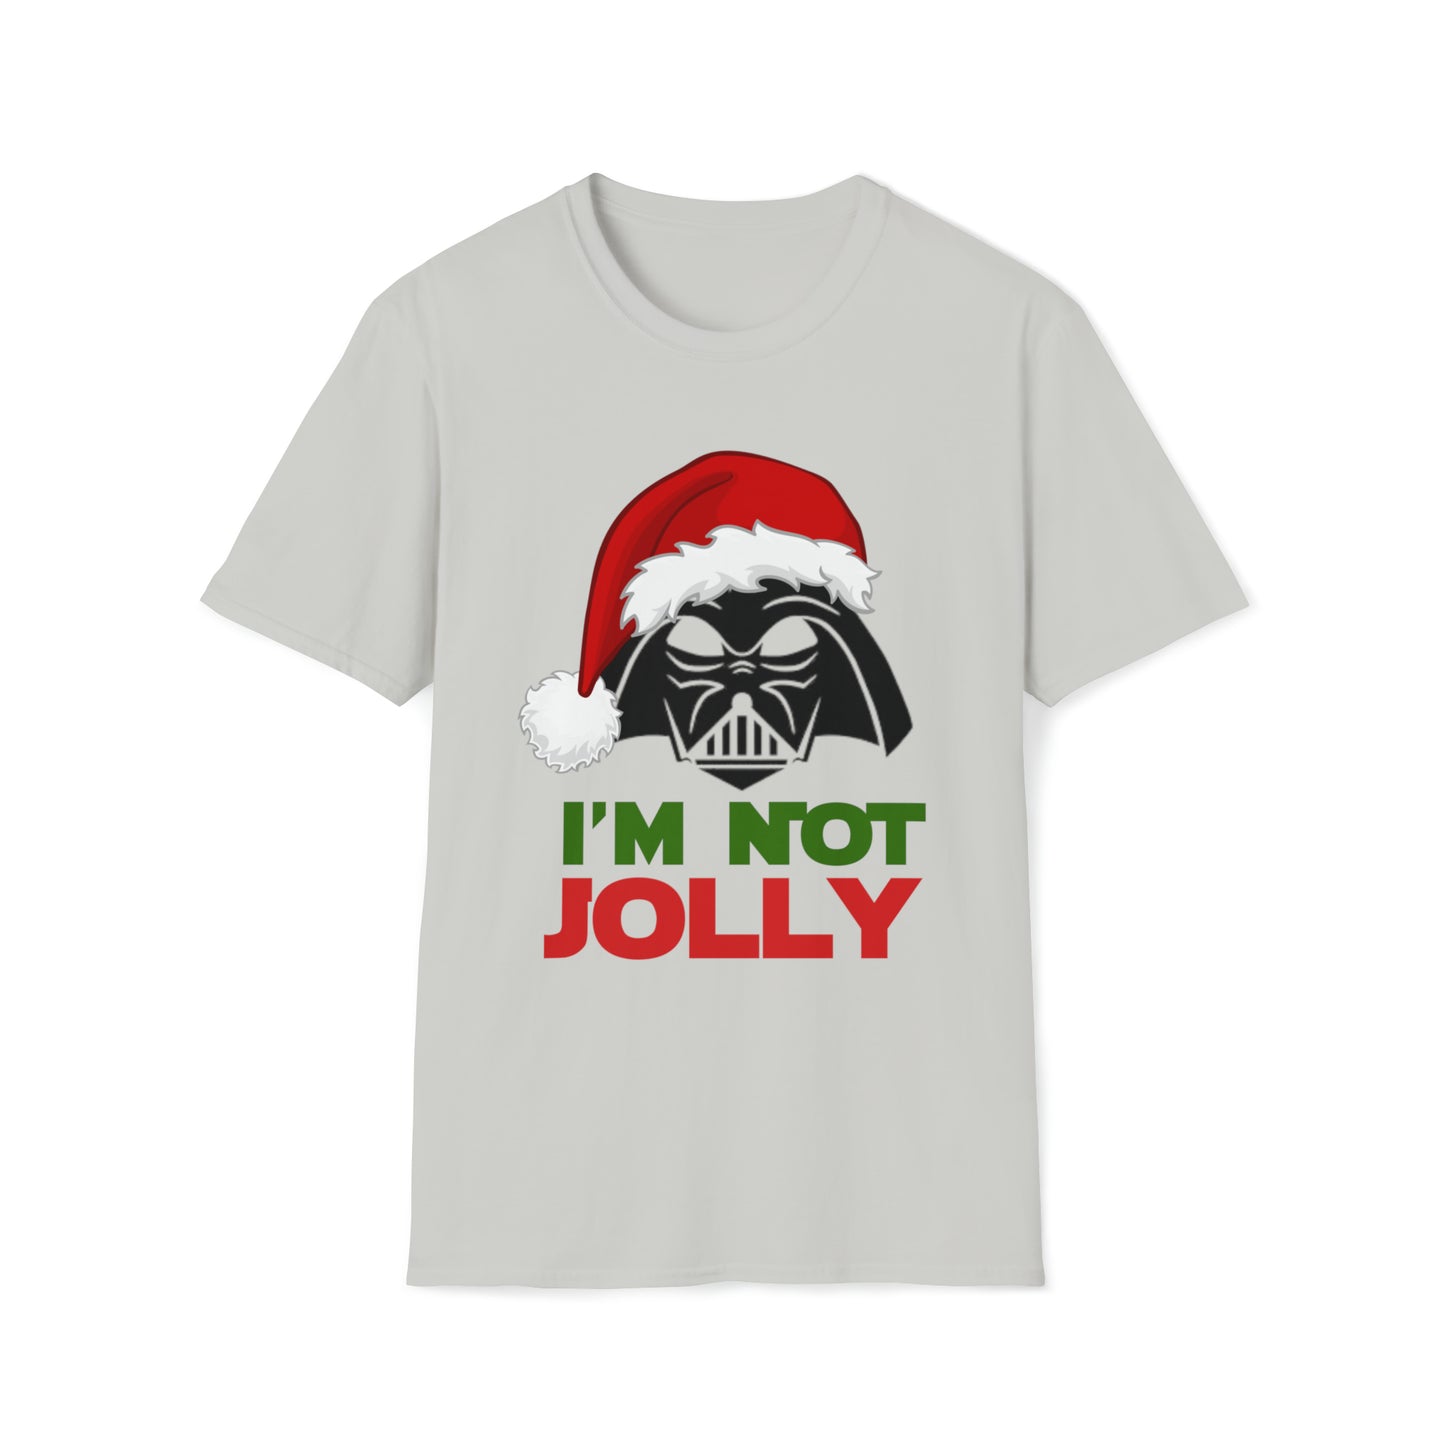 I’m not jolly Darth Vader - Unisex Softstyle T-Shirt